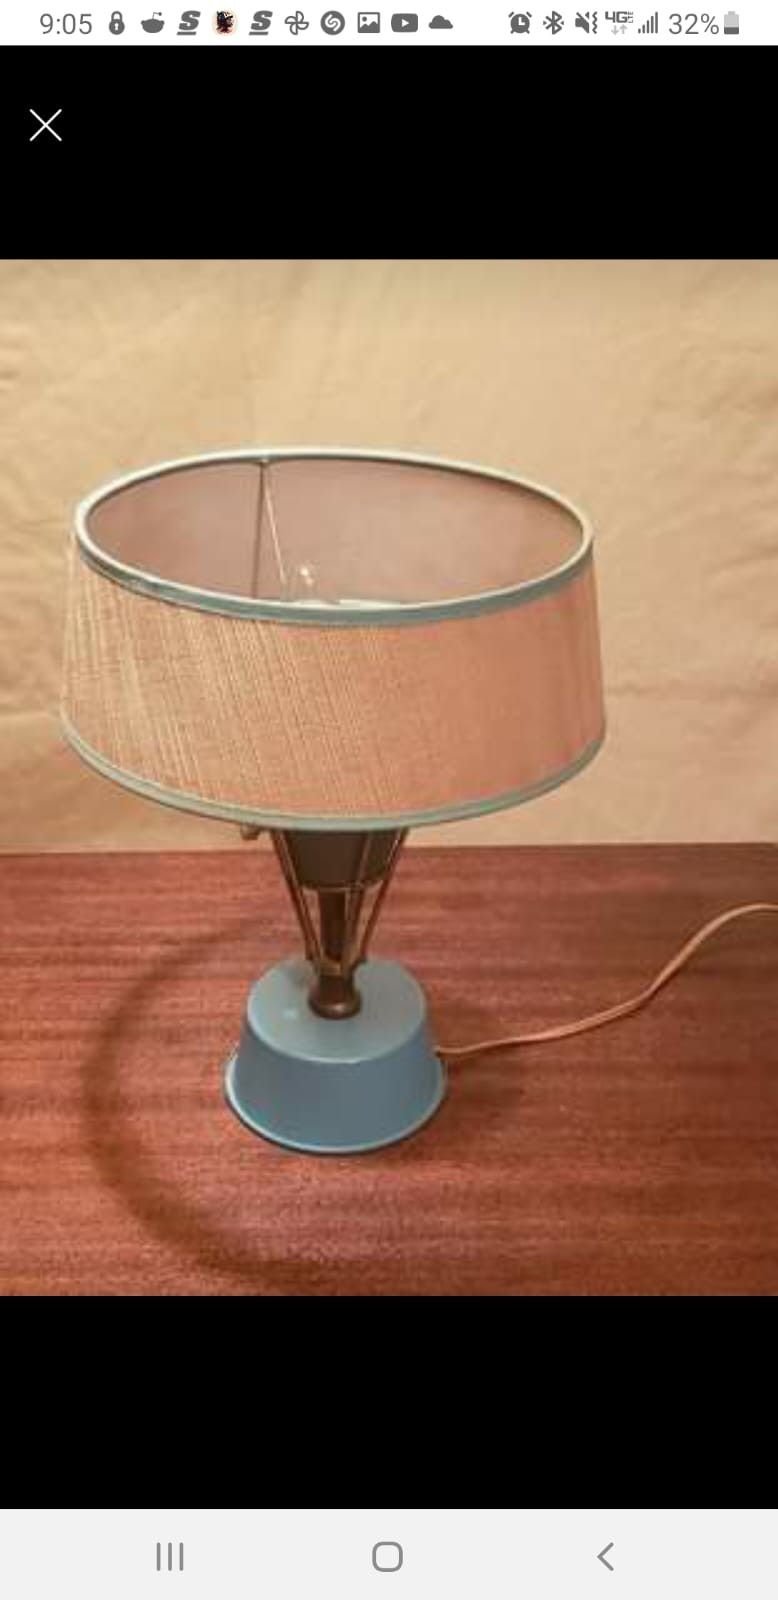 Retro Table Lamp